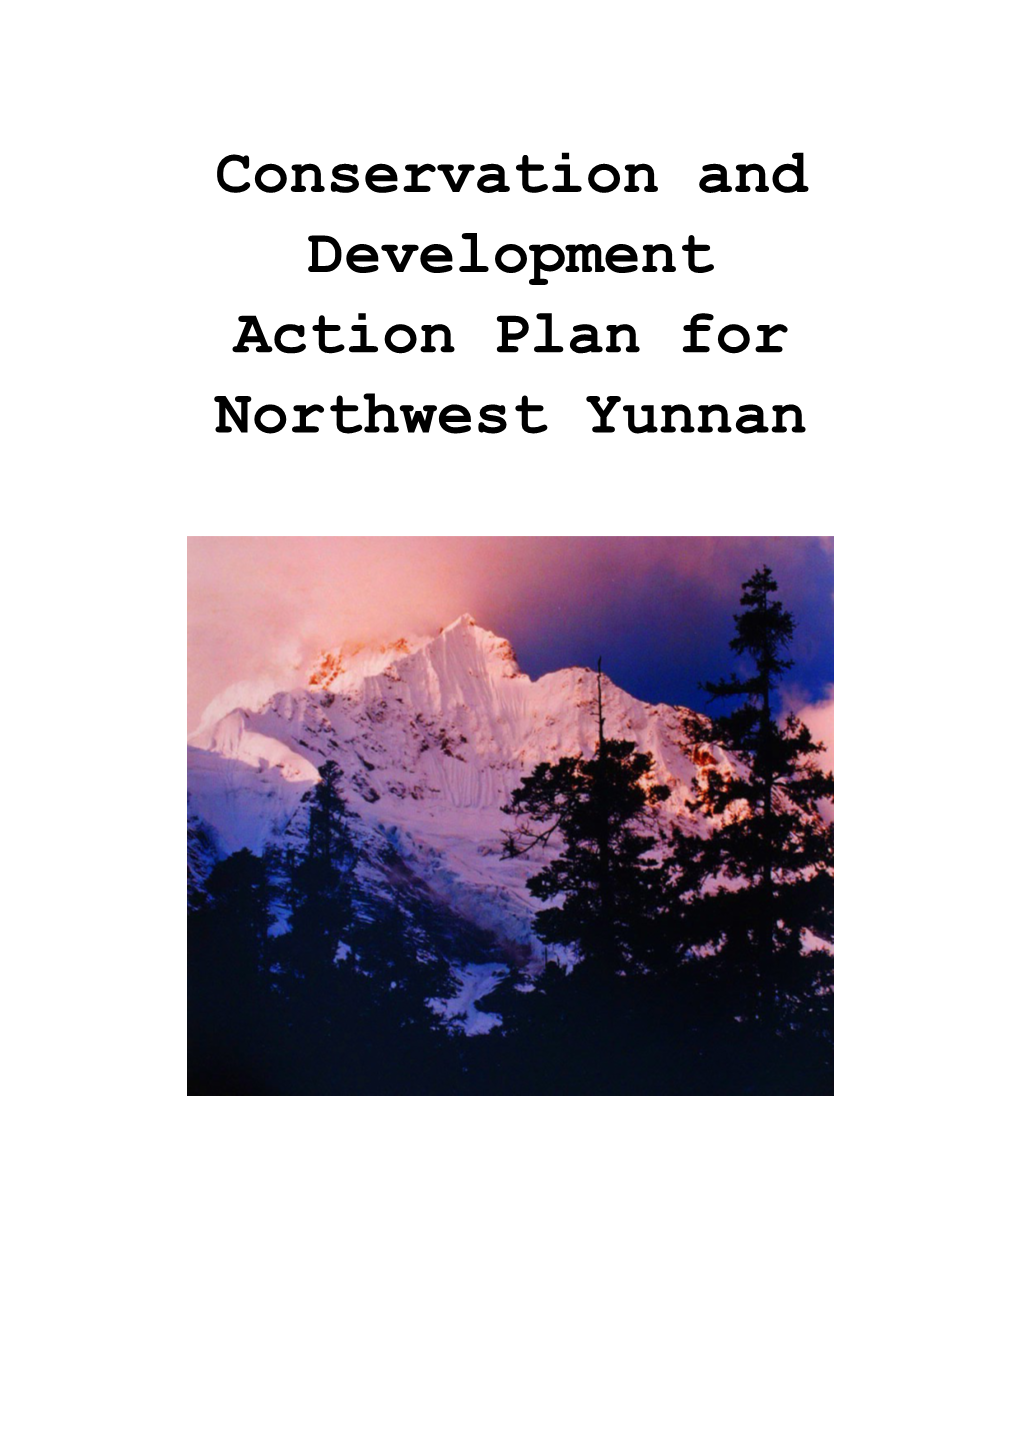 Action Plan for Northwest Yunnan